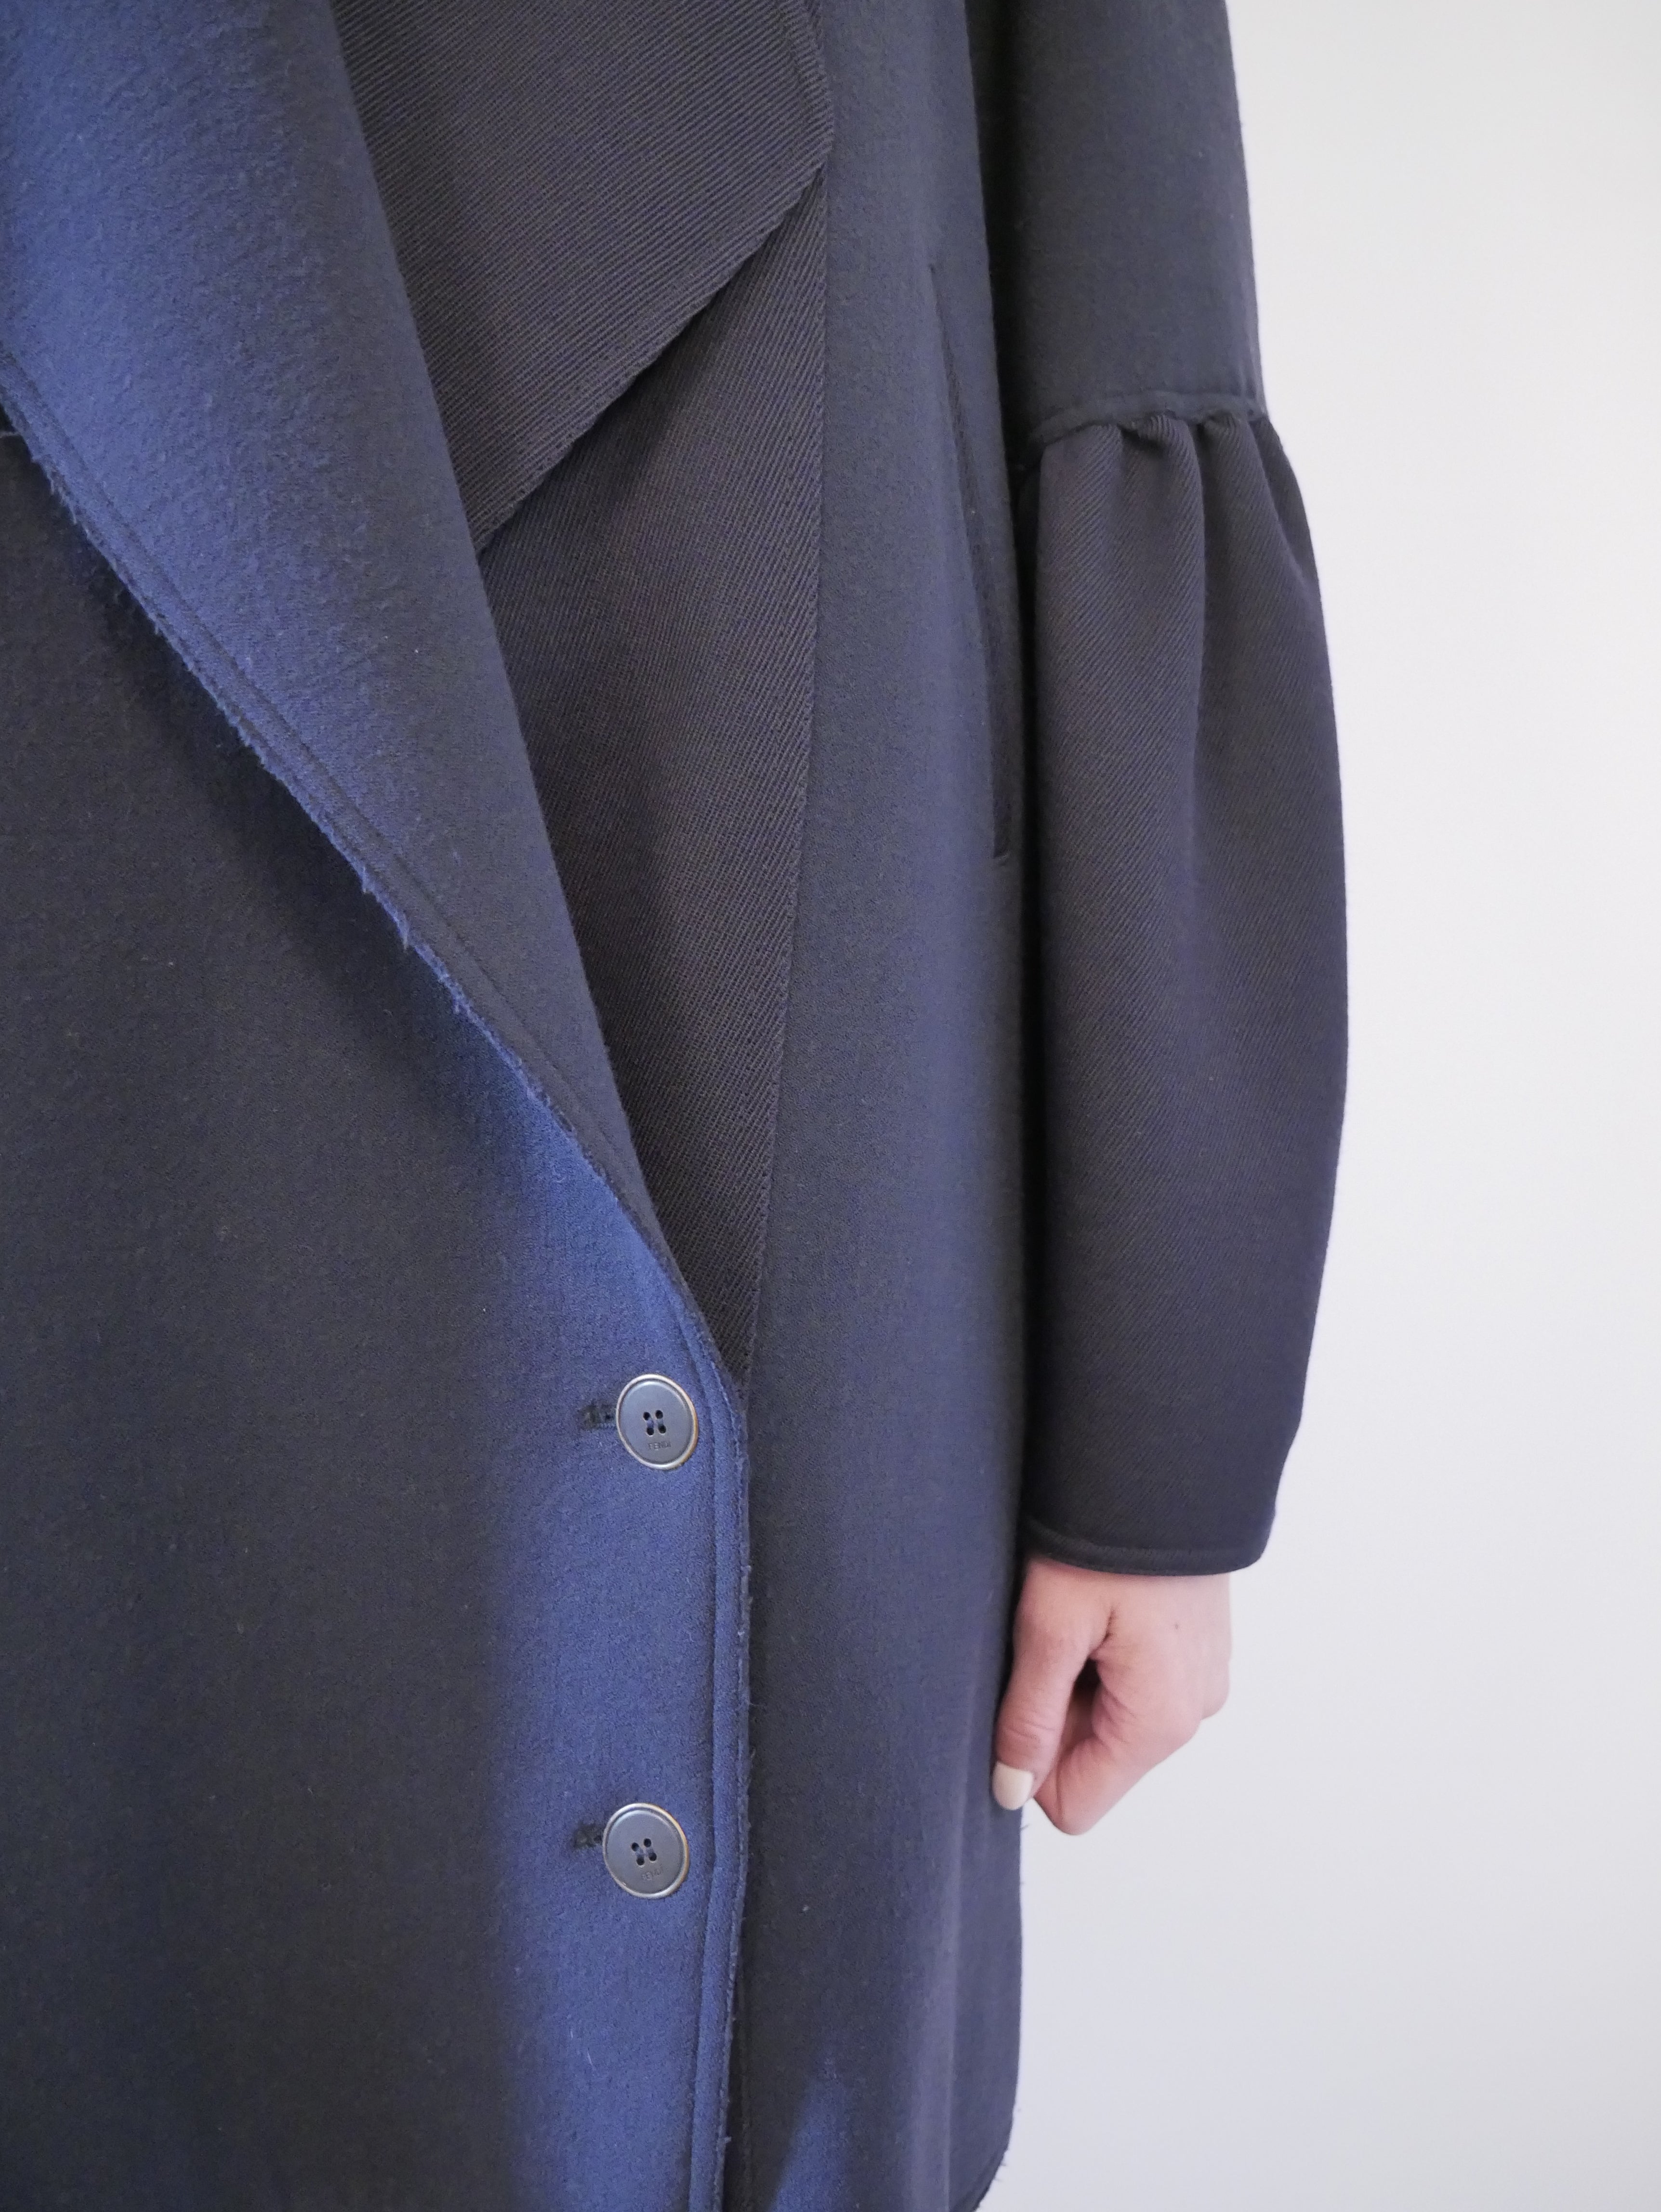 Fendi pre-loved over sized coat